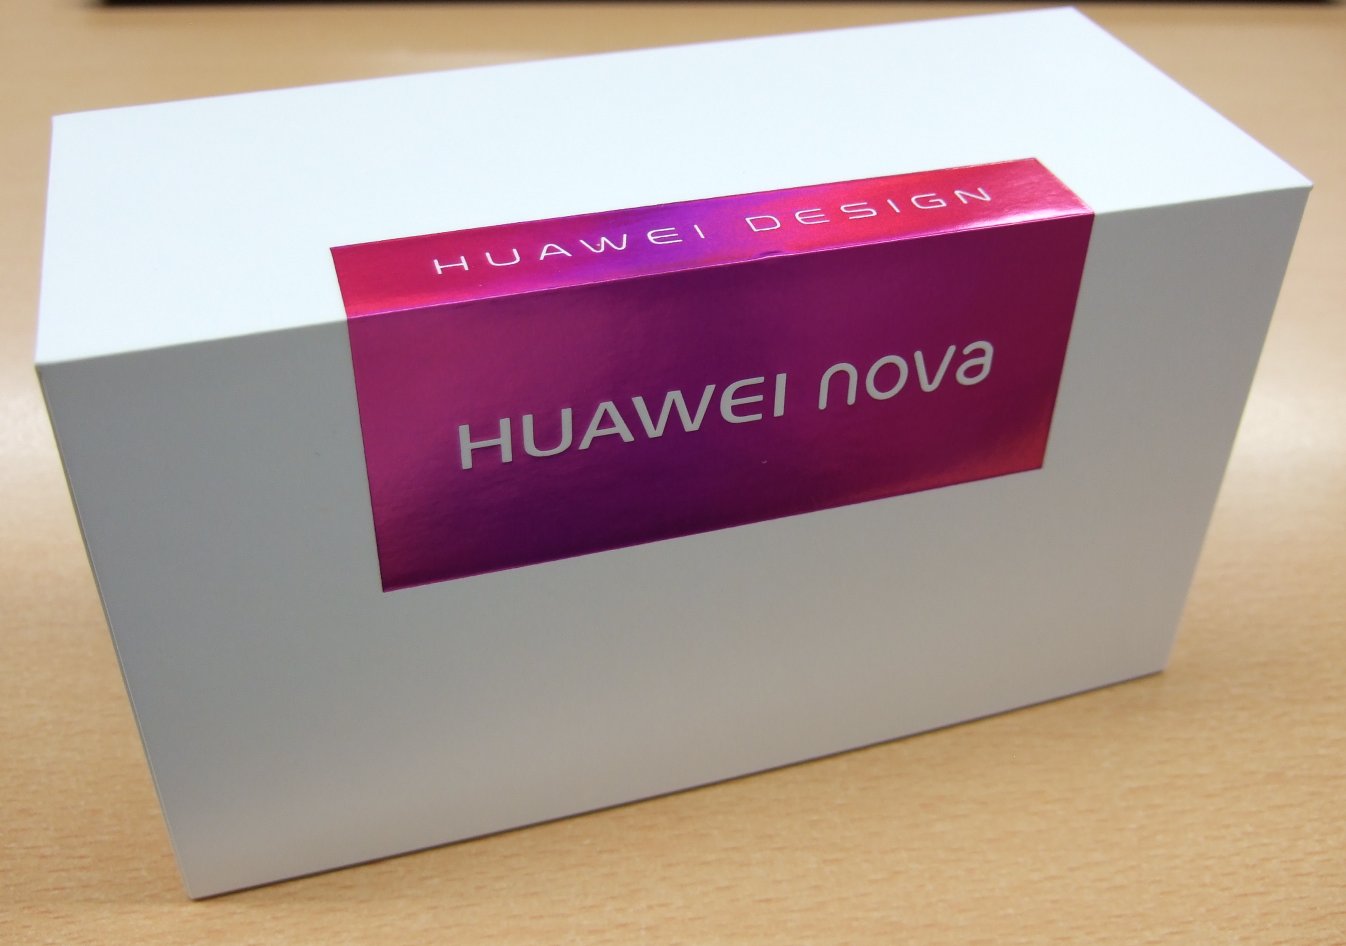 Huawei ファーウェイ Novaを4か月使って思うこと ほとんど不満はない エスナビ 子育て親による安くて使えるスマホや便利なグッズの紹介